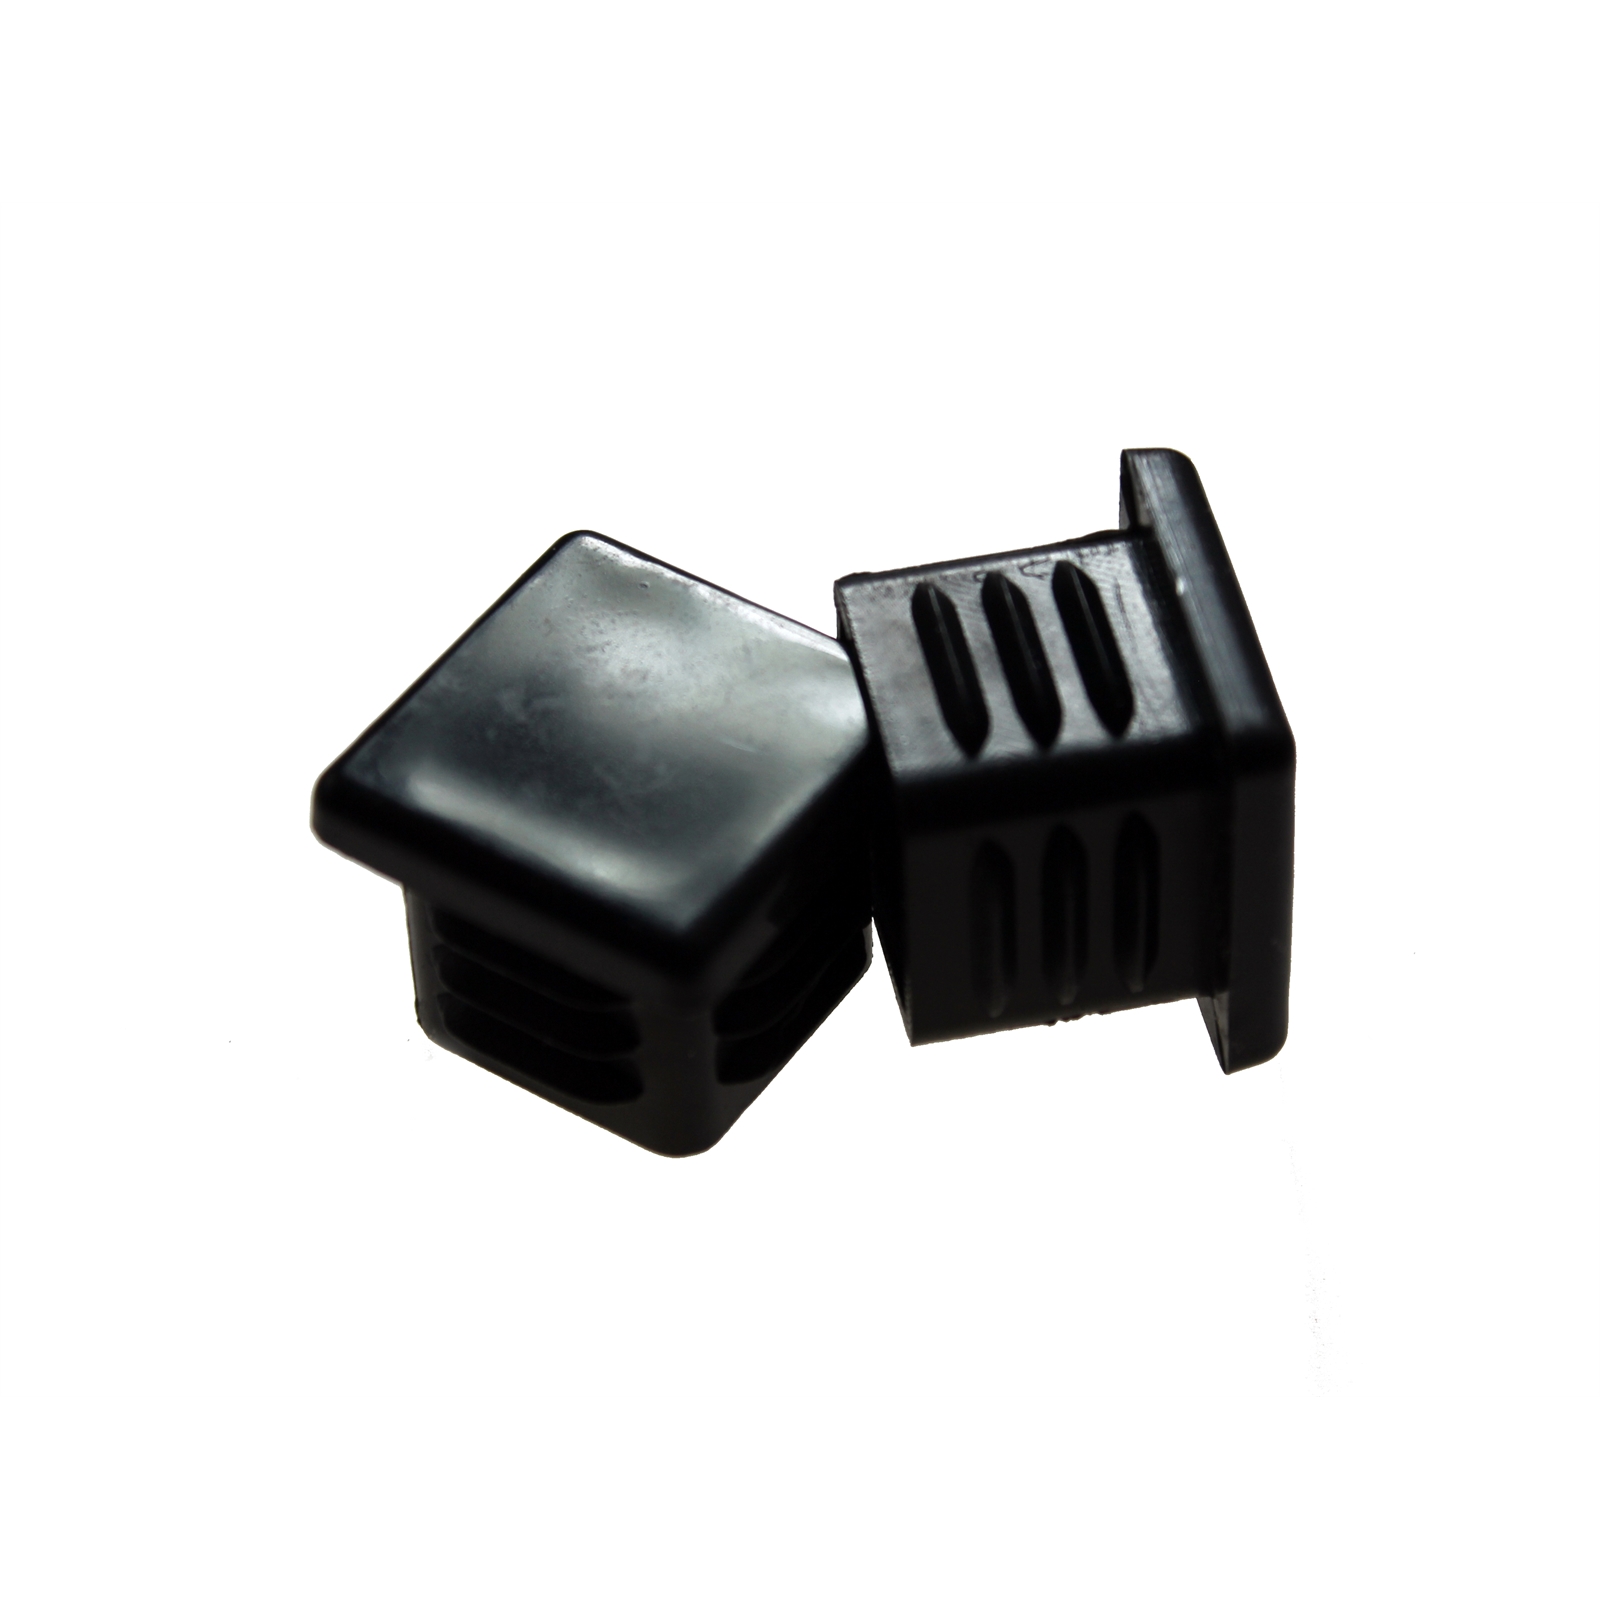 TIC 25mm Square Black Plastic Internal Chair Tip - 4 Piece